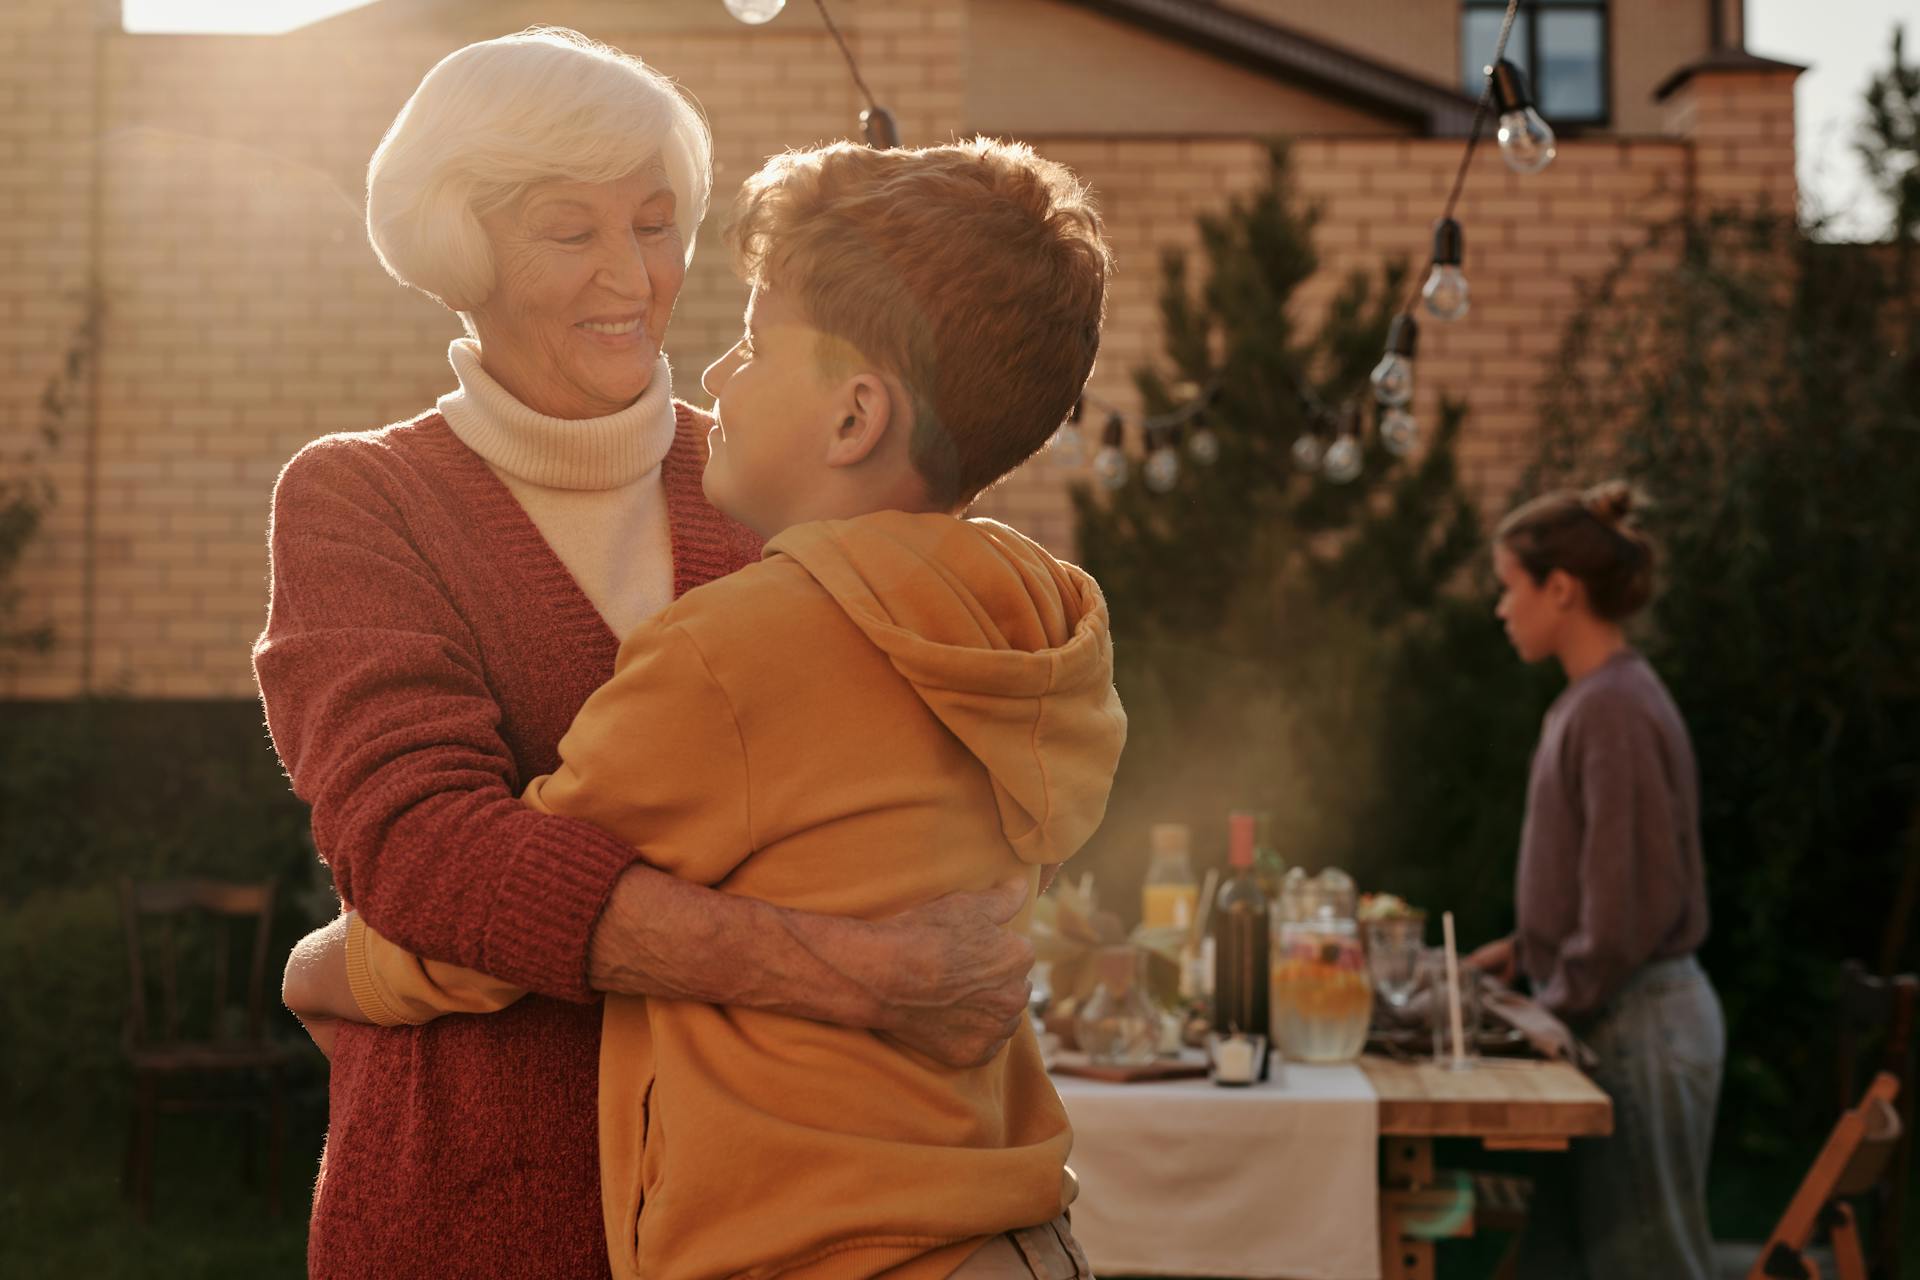 An elderly woman hugging her grandson | Source: Pexels